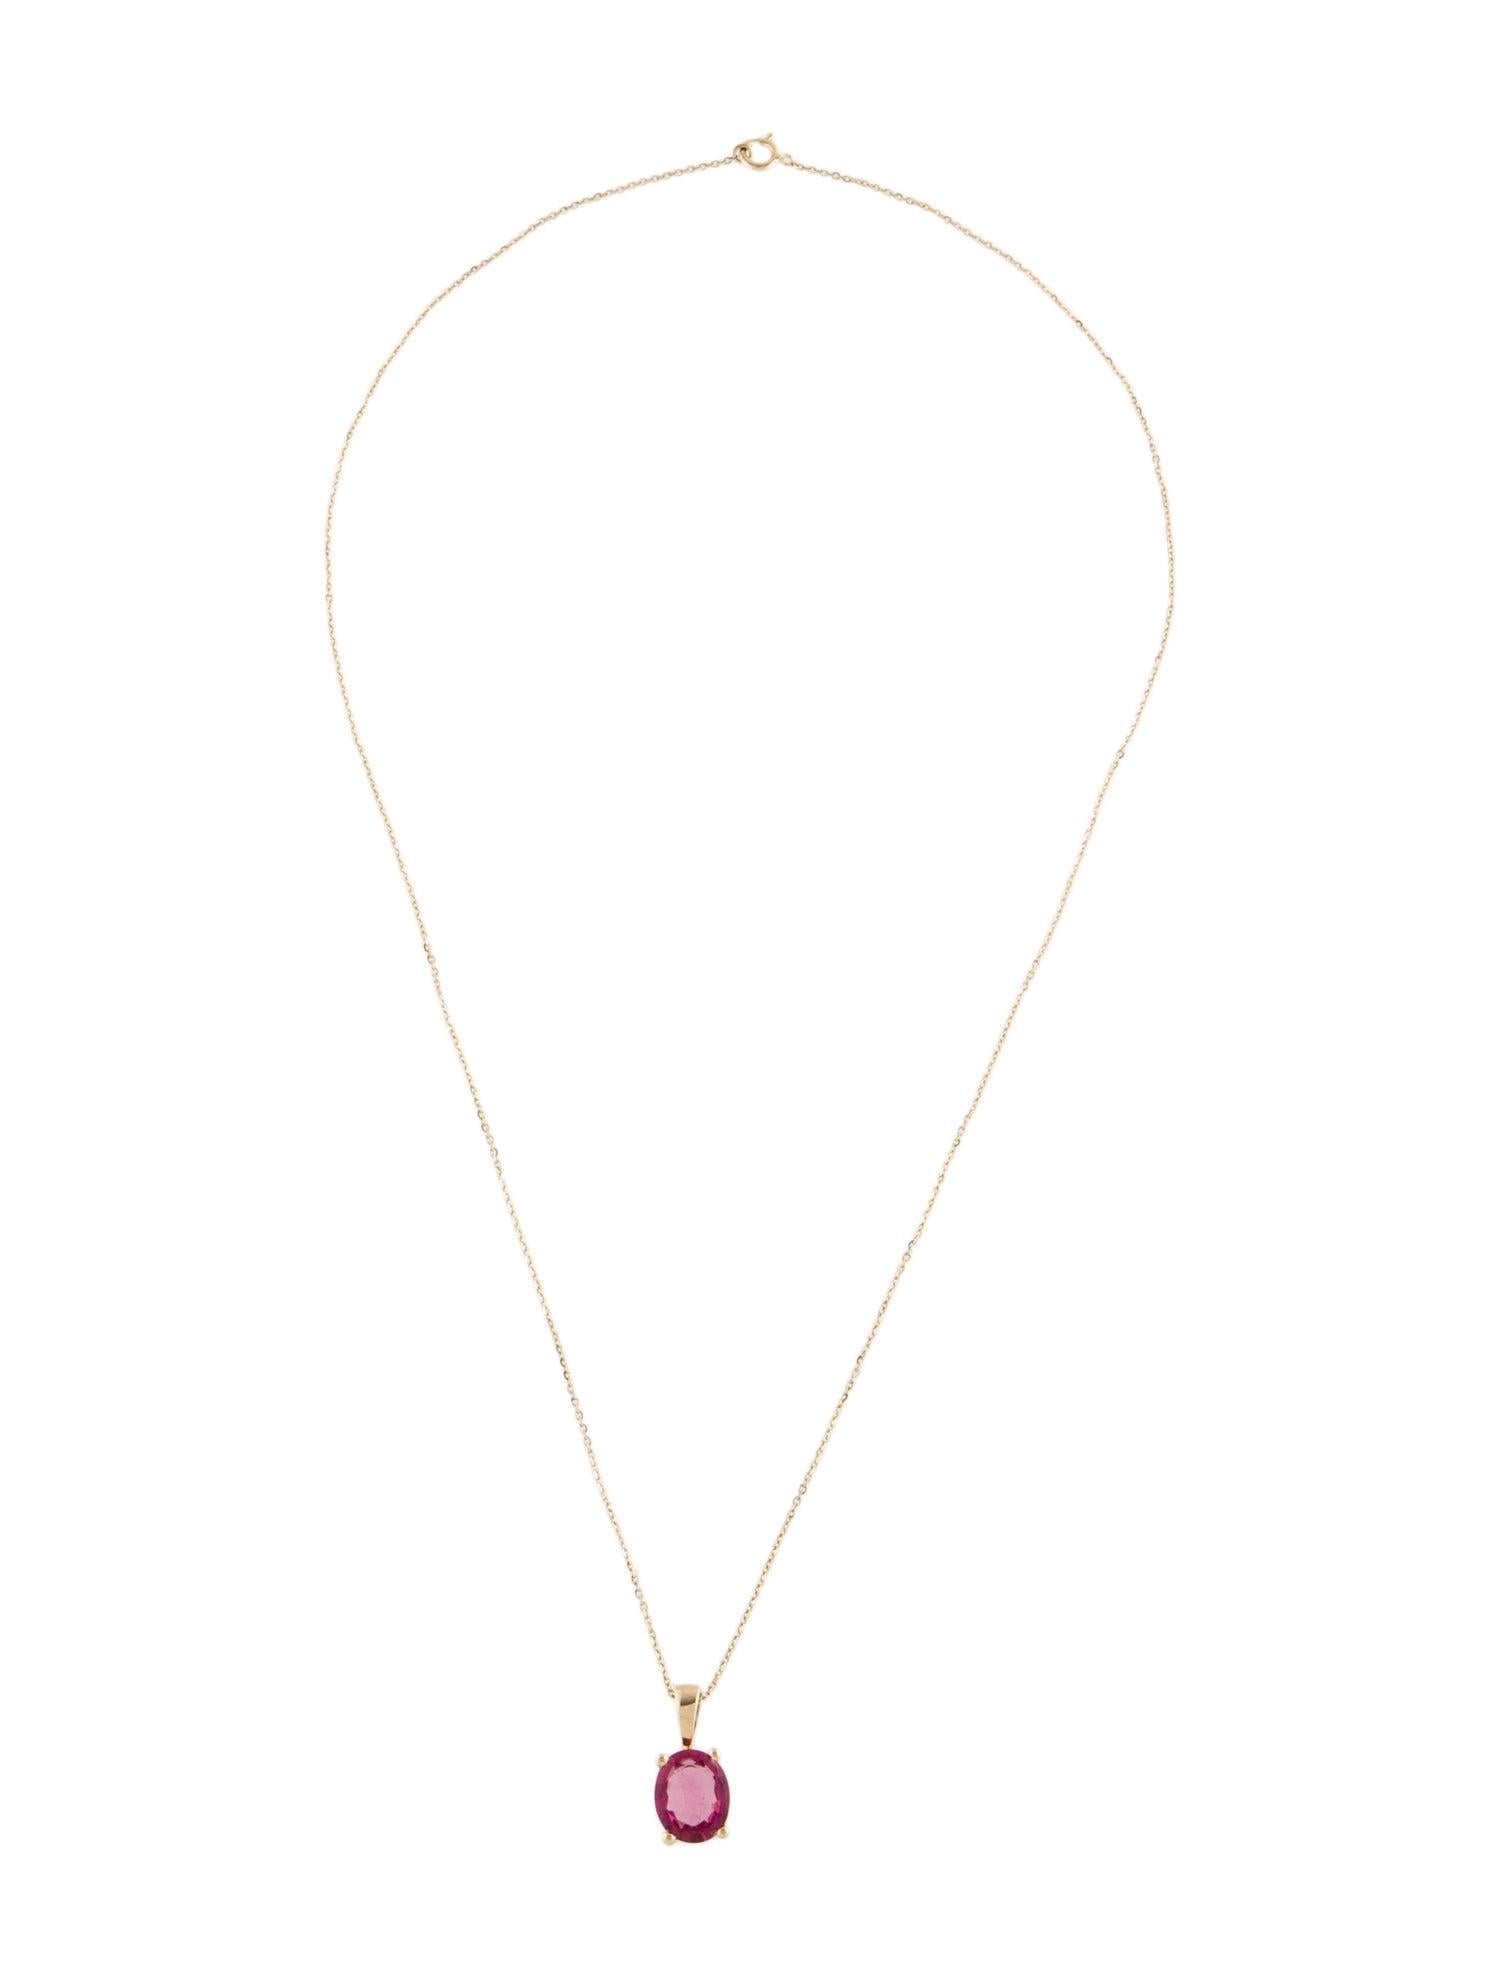 Brilliant Cut Luxury 14K Tourmaline Pendant Necklace - Stunning Gemstone Statement Jewelry For Sale